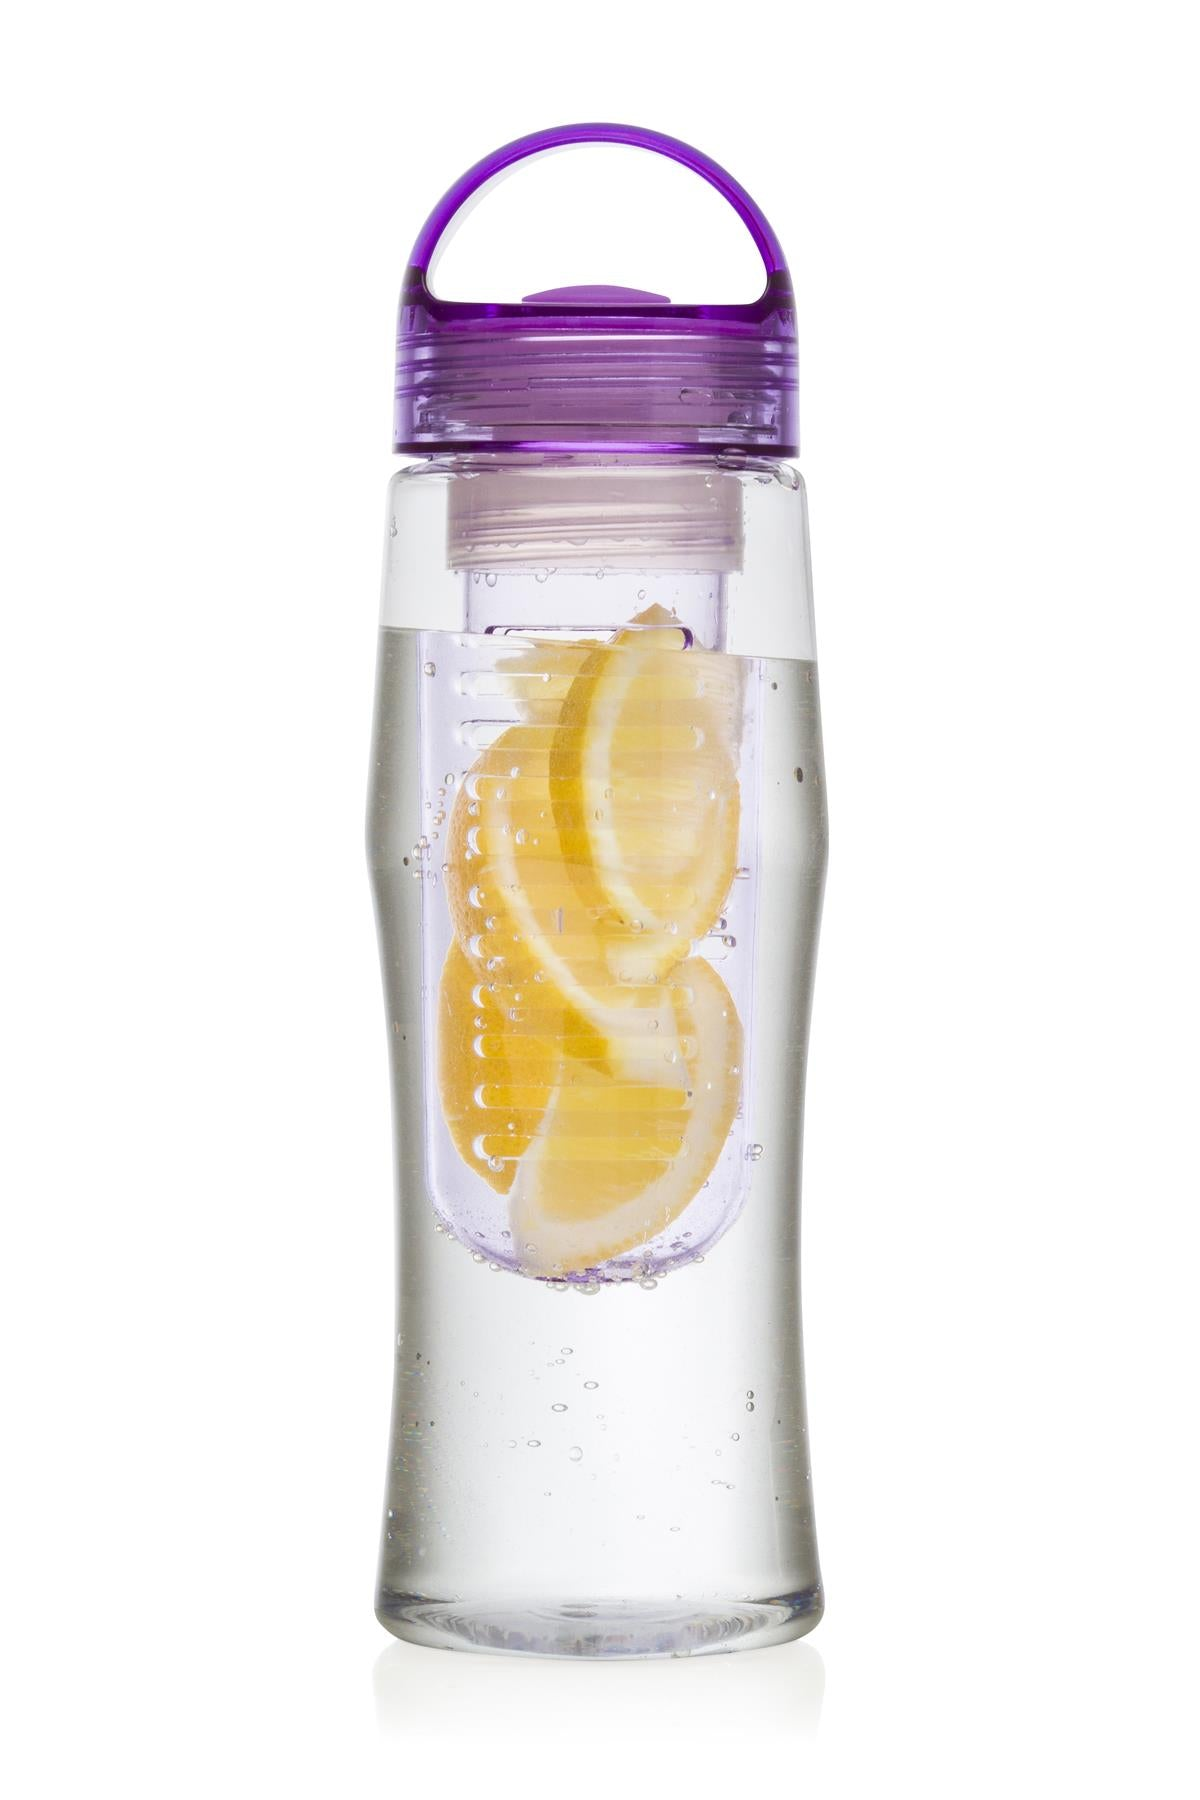 Fruitzola JAMMER Fruit Infuser Water Bottle In 5 Colors